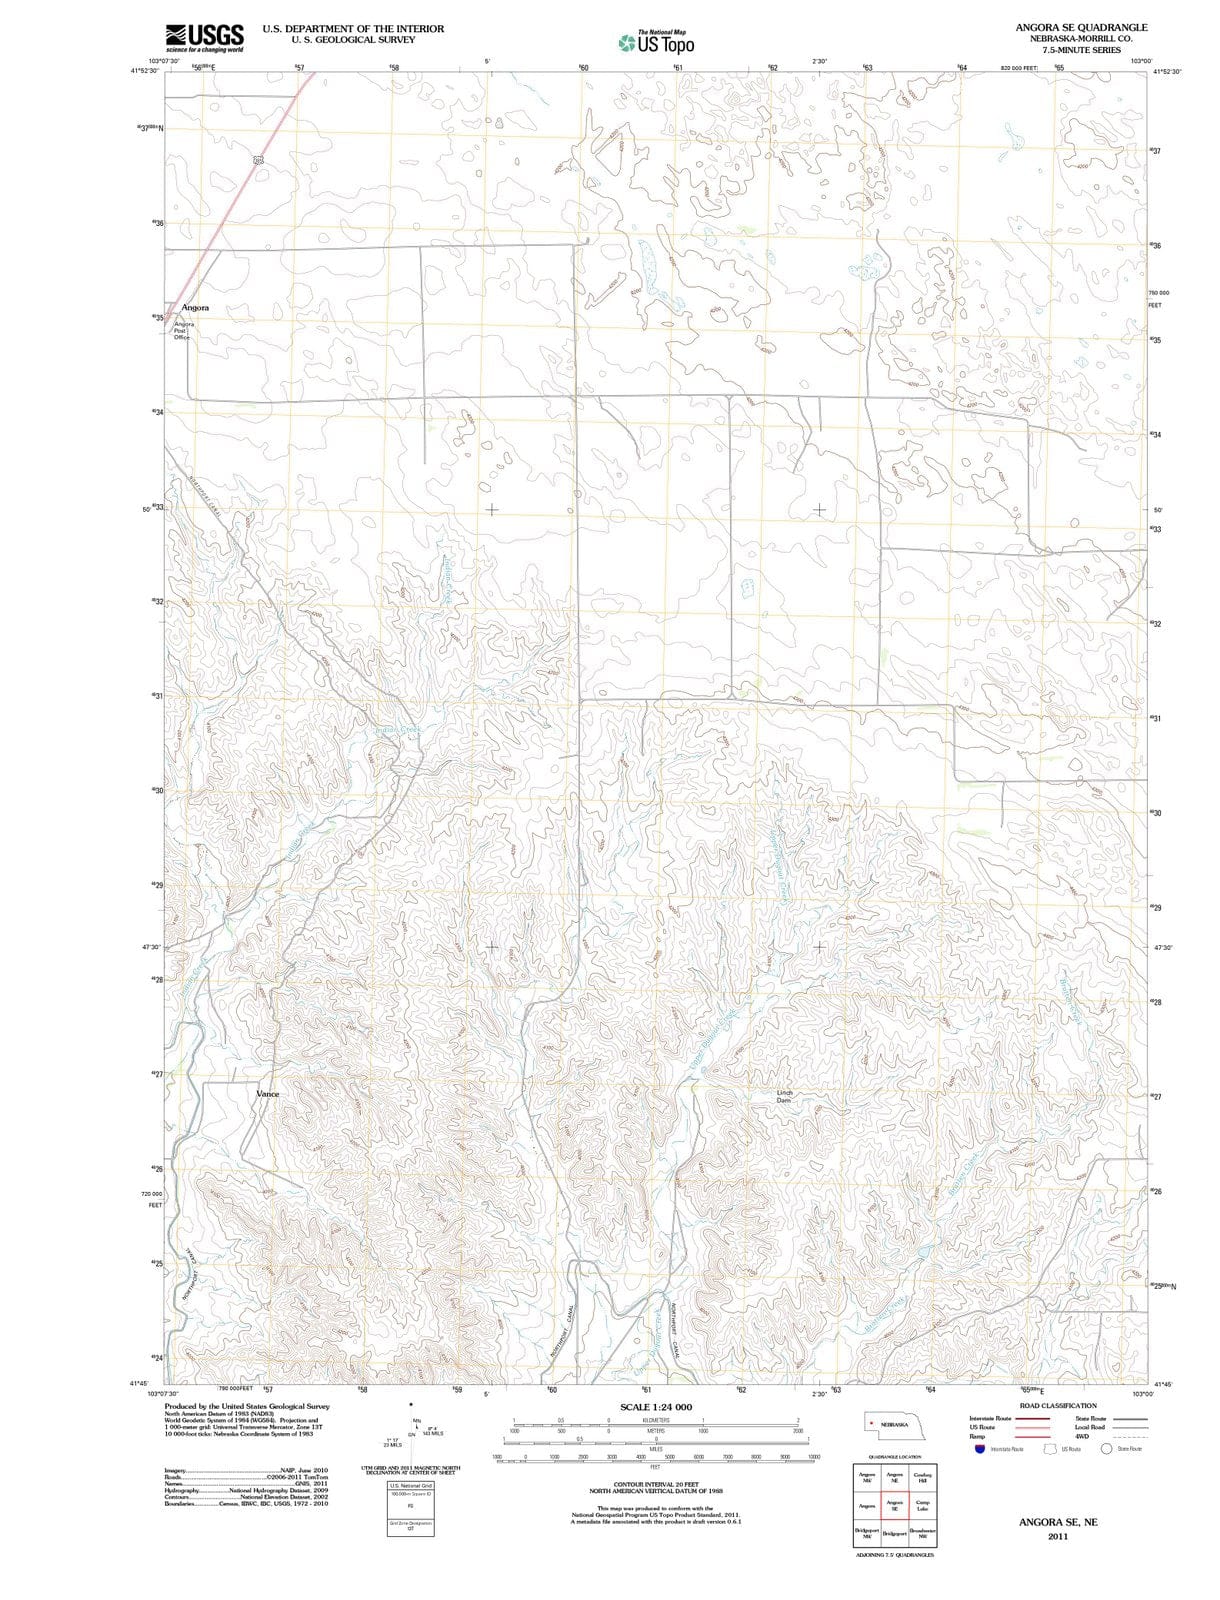 2011 Angora, NE - Nebraska - USGS Topographic Map v4